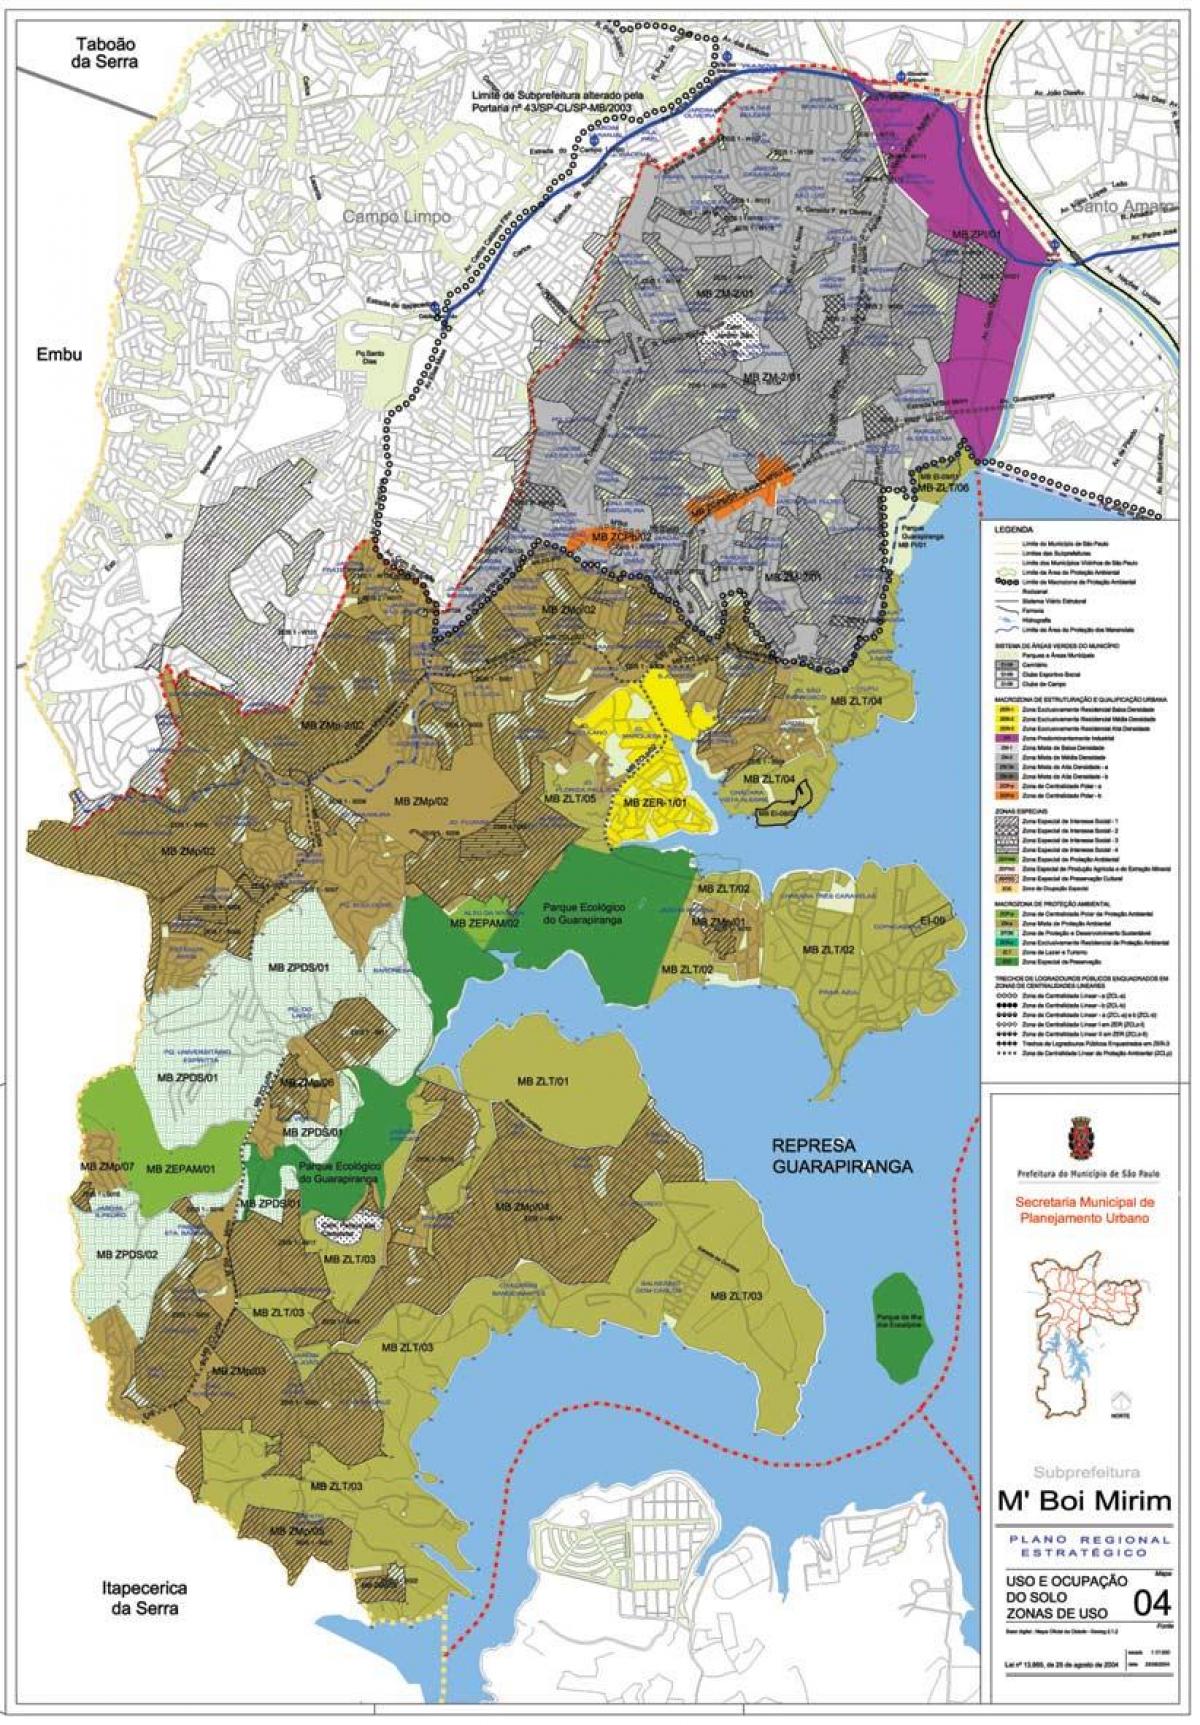 Map of M'Boi Mirim São Paulo - Occupation of the soil